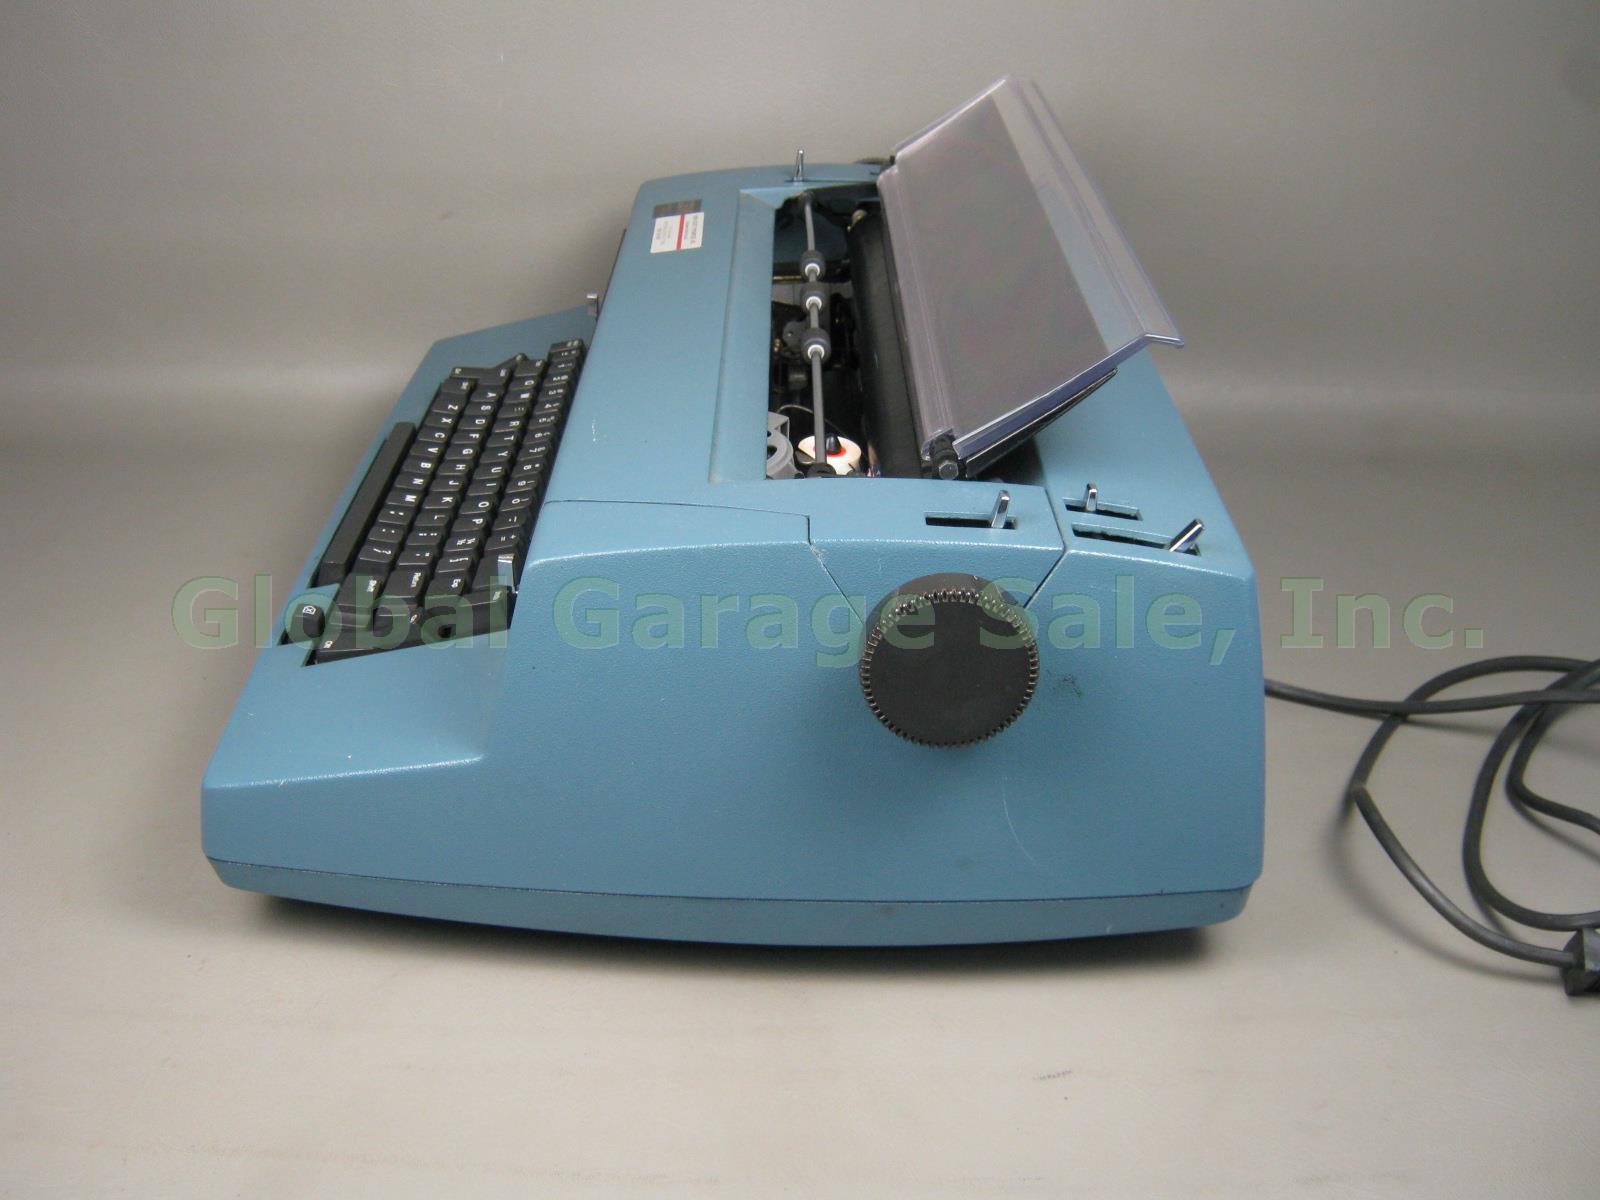 Blue IBM Correcting Selectric III Typewriter Professionally Refurbished 7/30/15 3